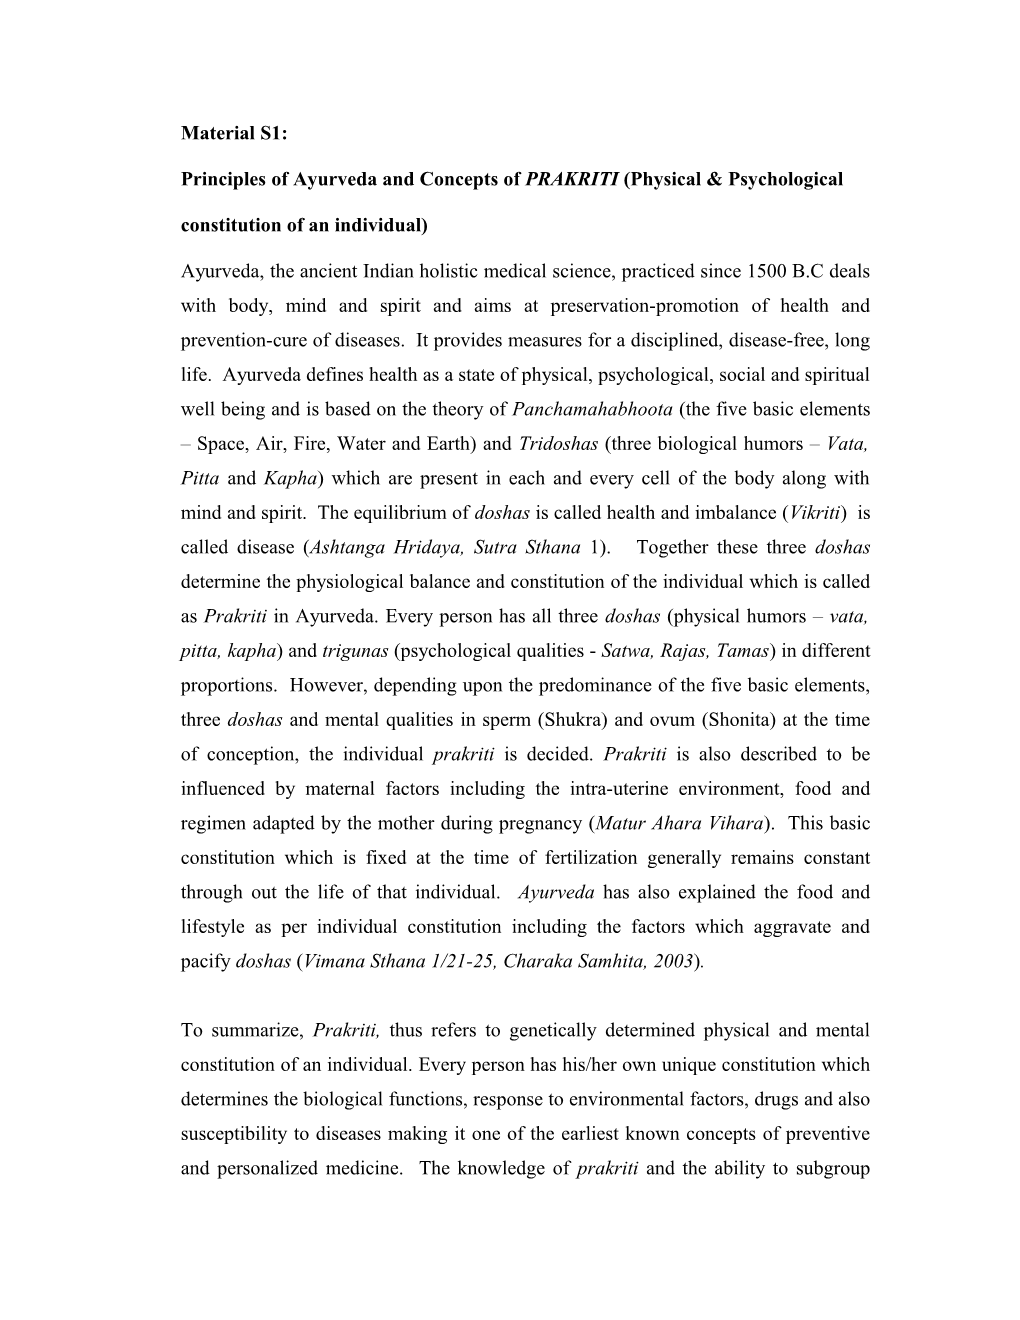 Ayurvedic Concept of Prakriti (Physical & Psychological Constitution)